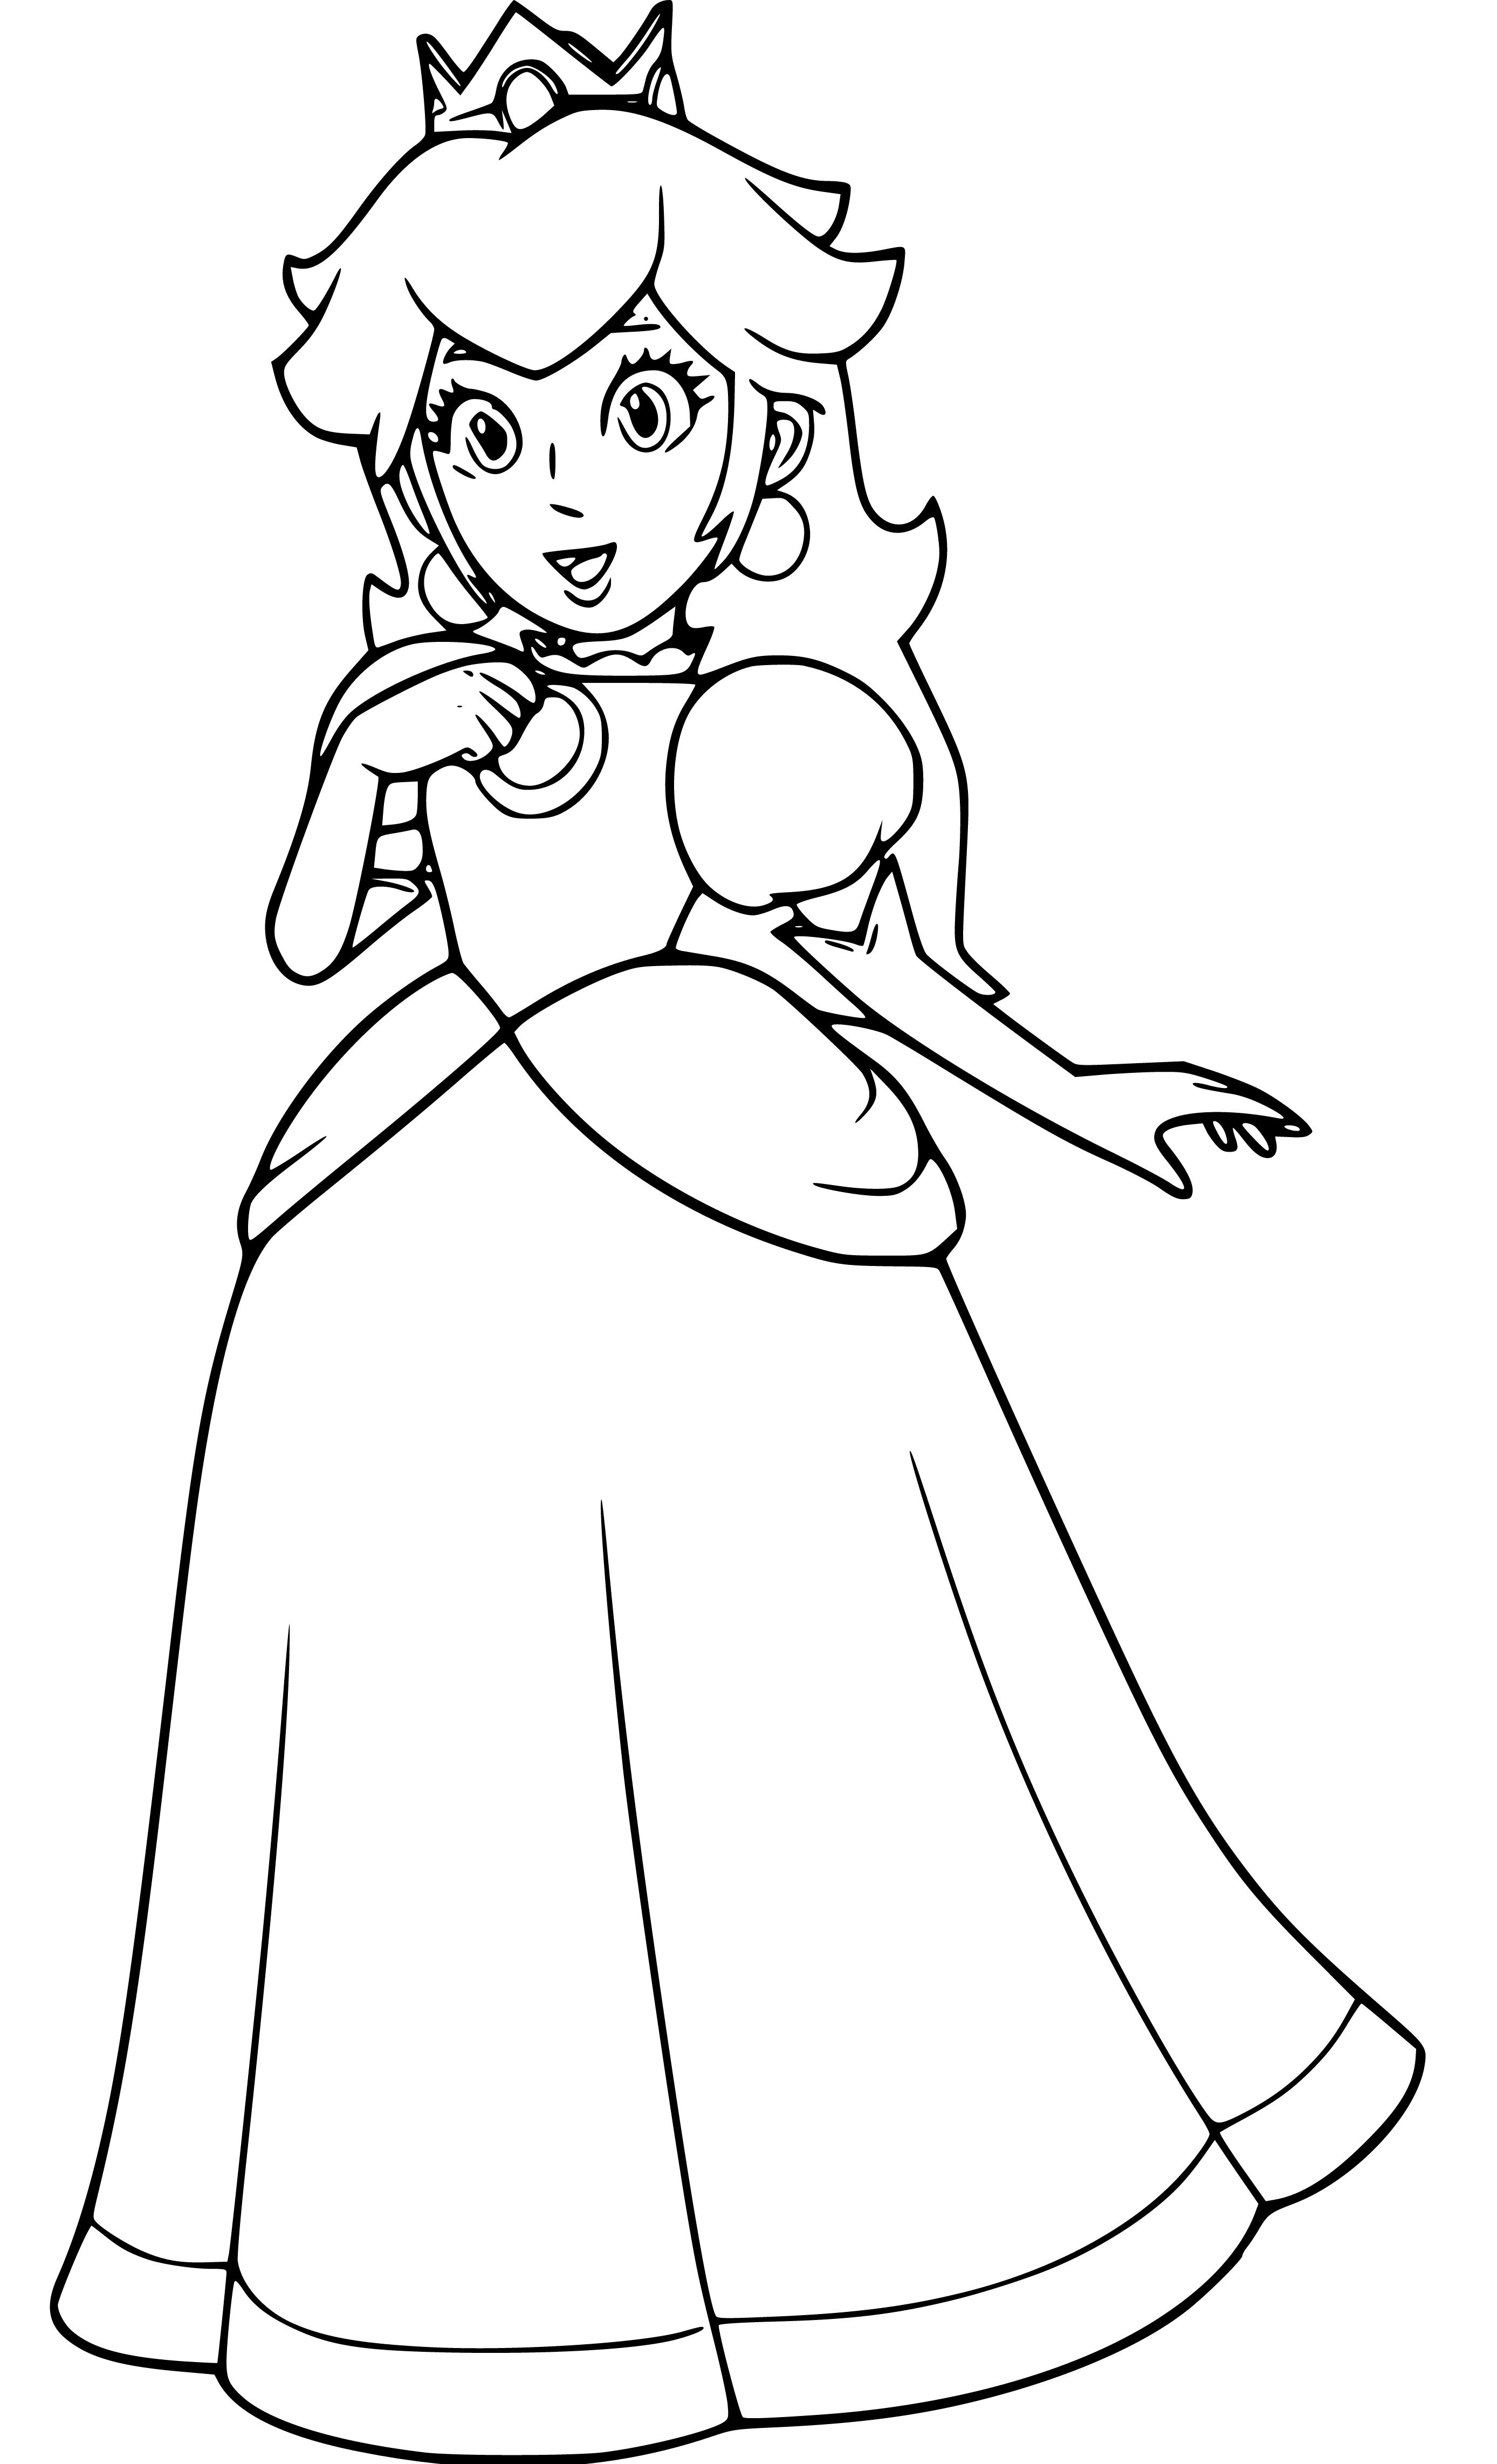 Lovely Princess Peach Coloring Page (Super Mario) - SheetalColor.com